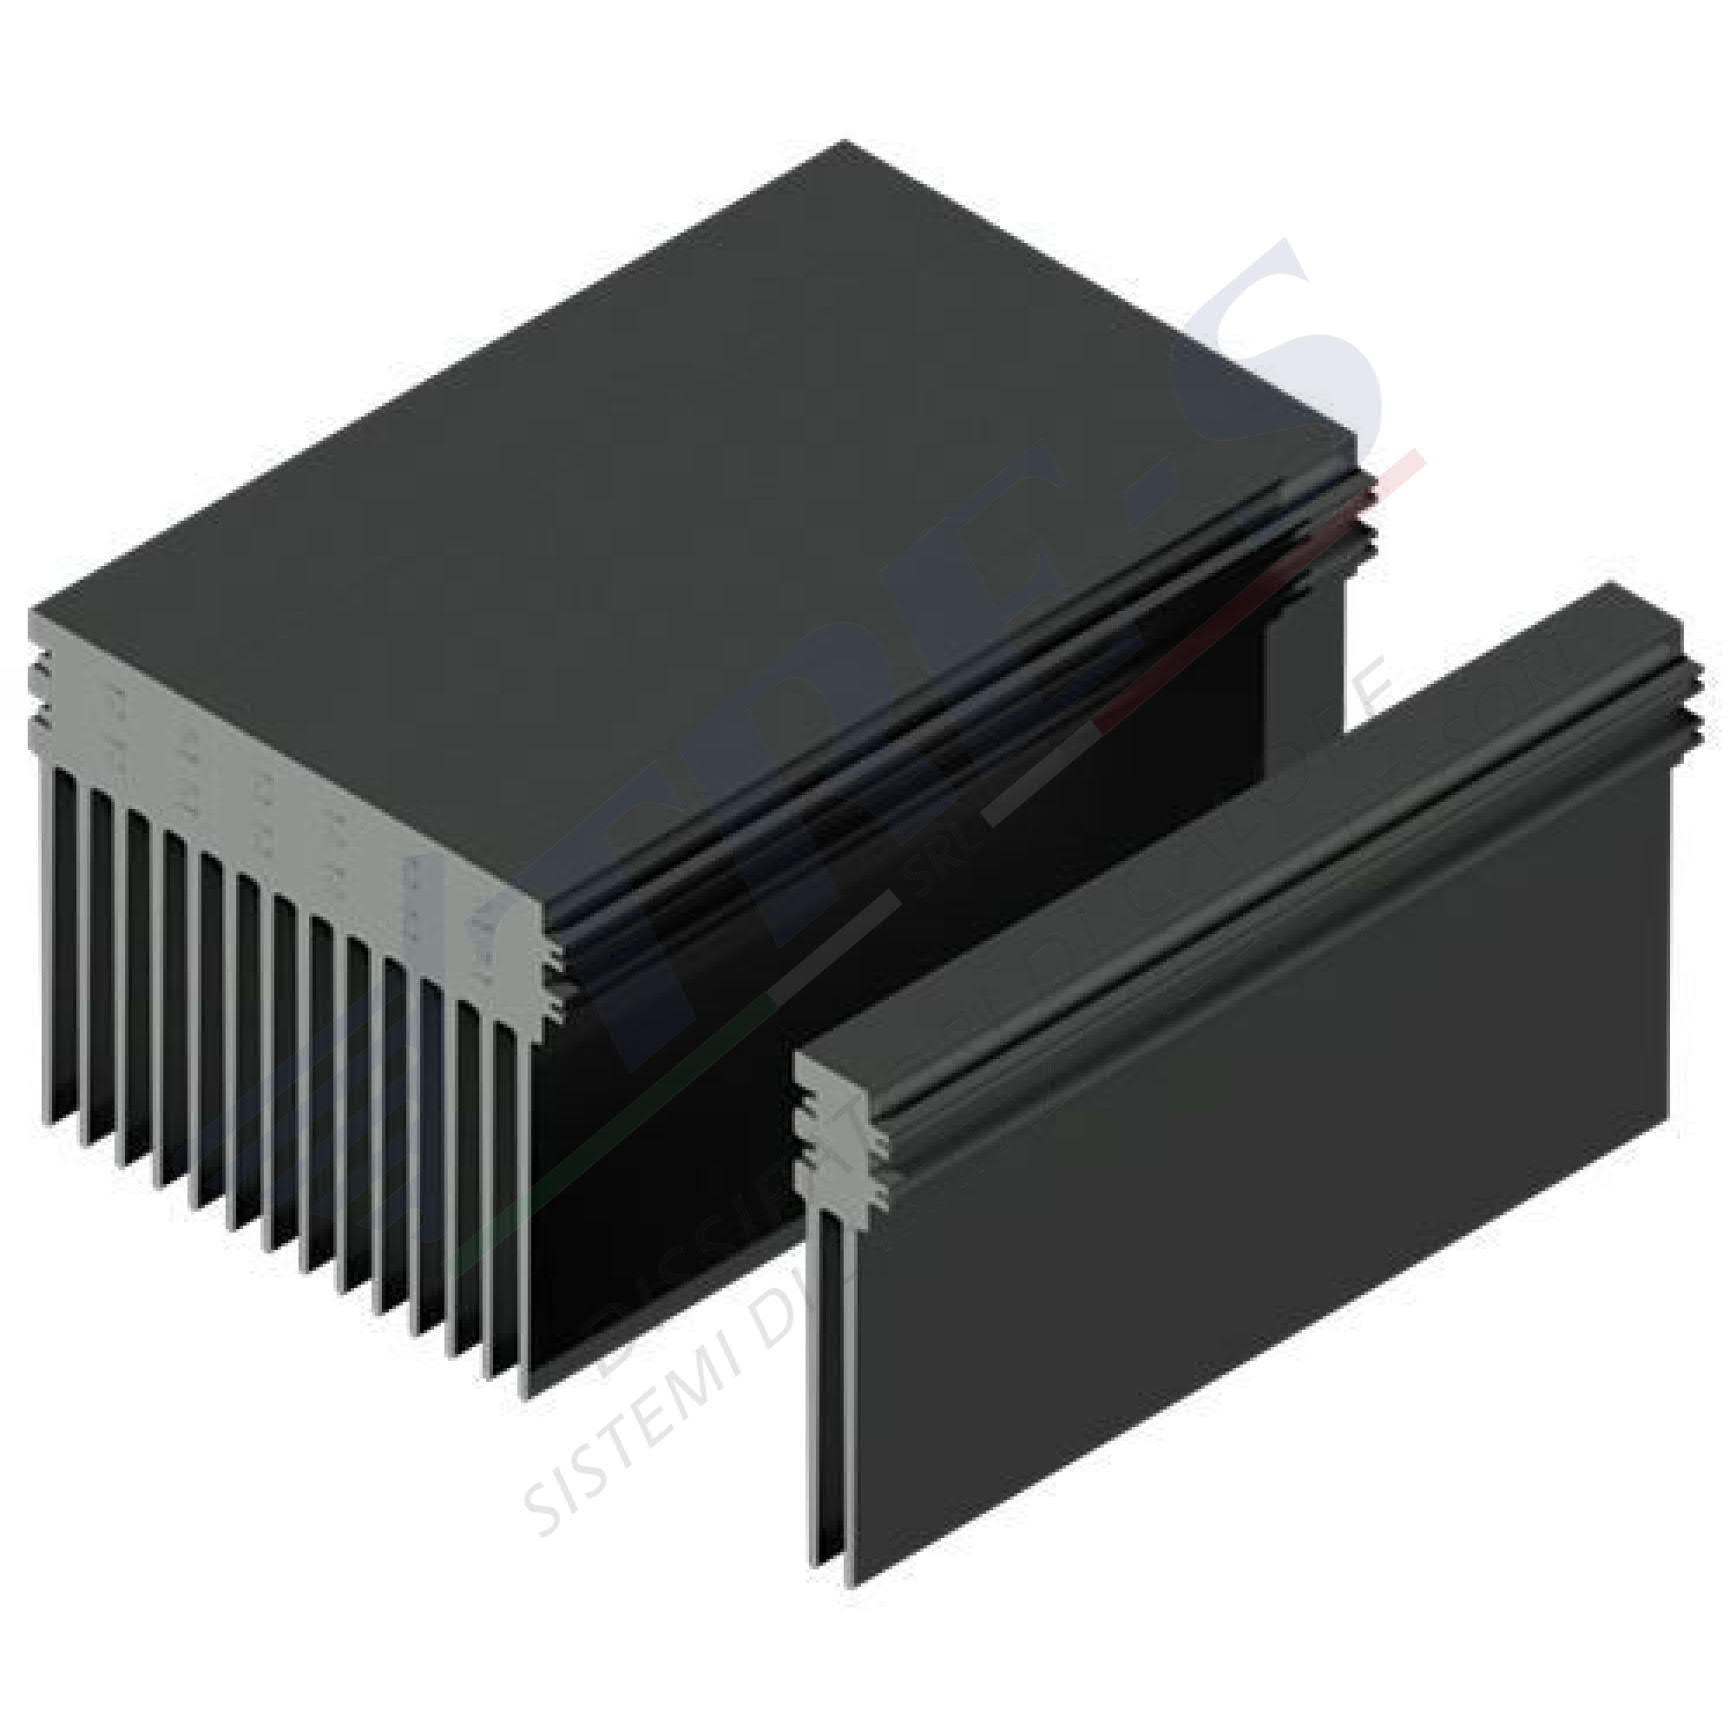 PRI1006 - Embedded heat sinks